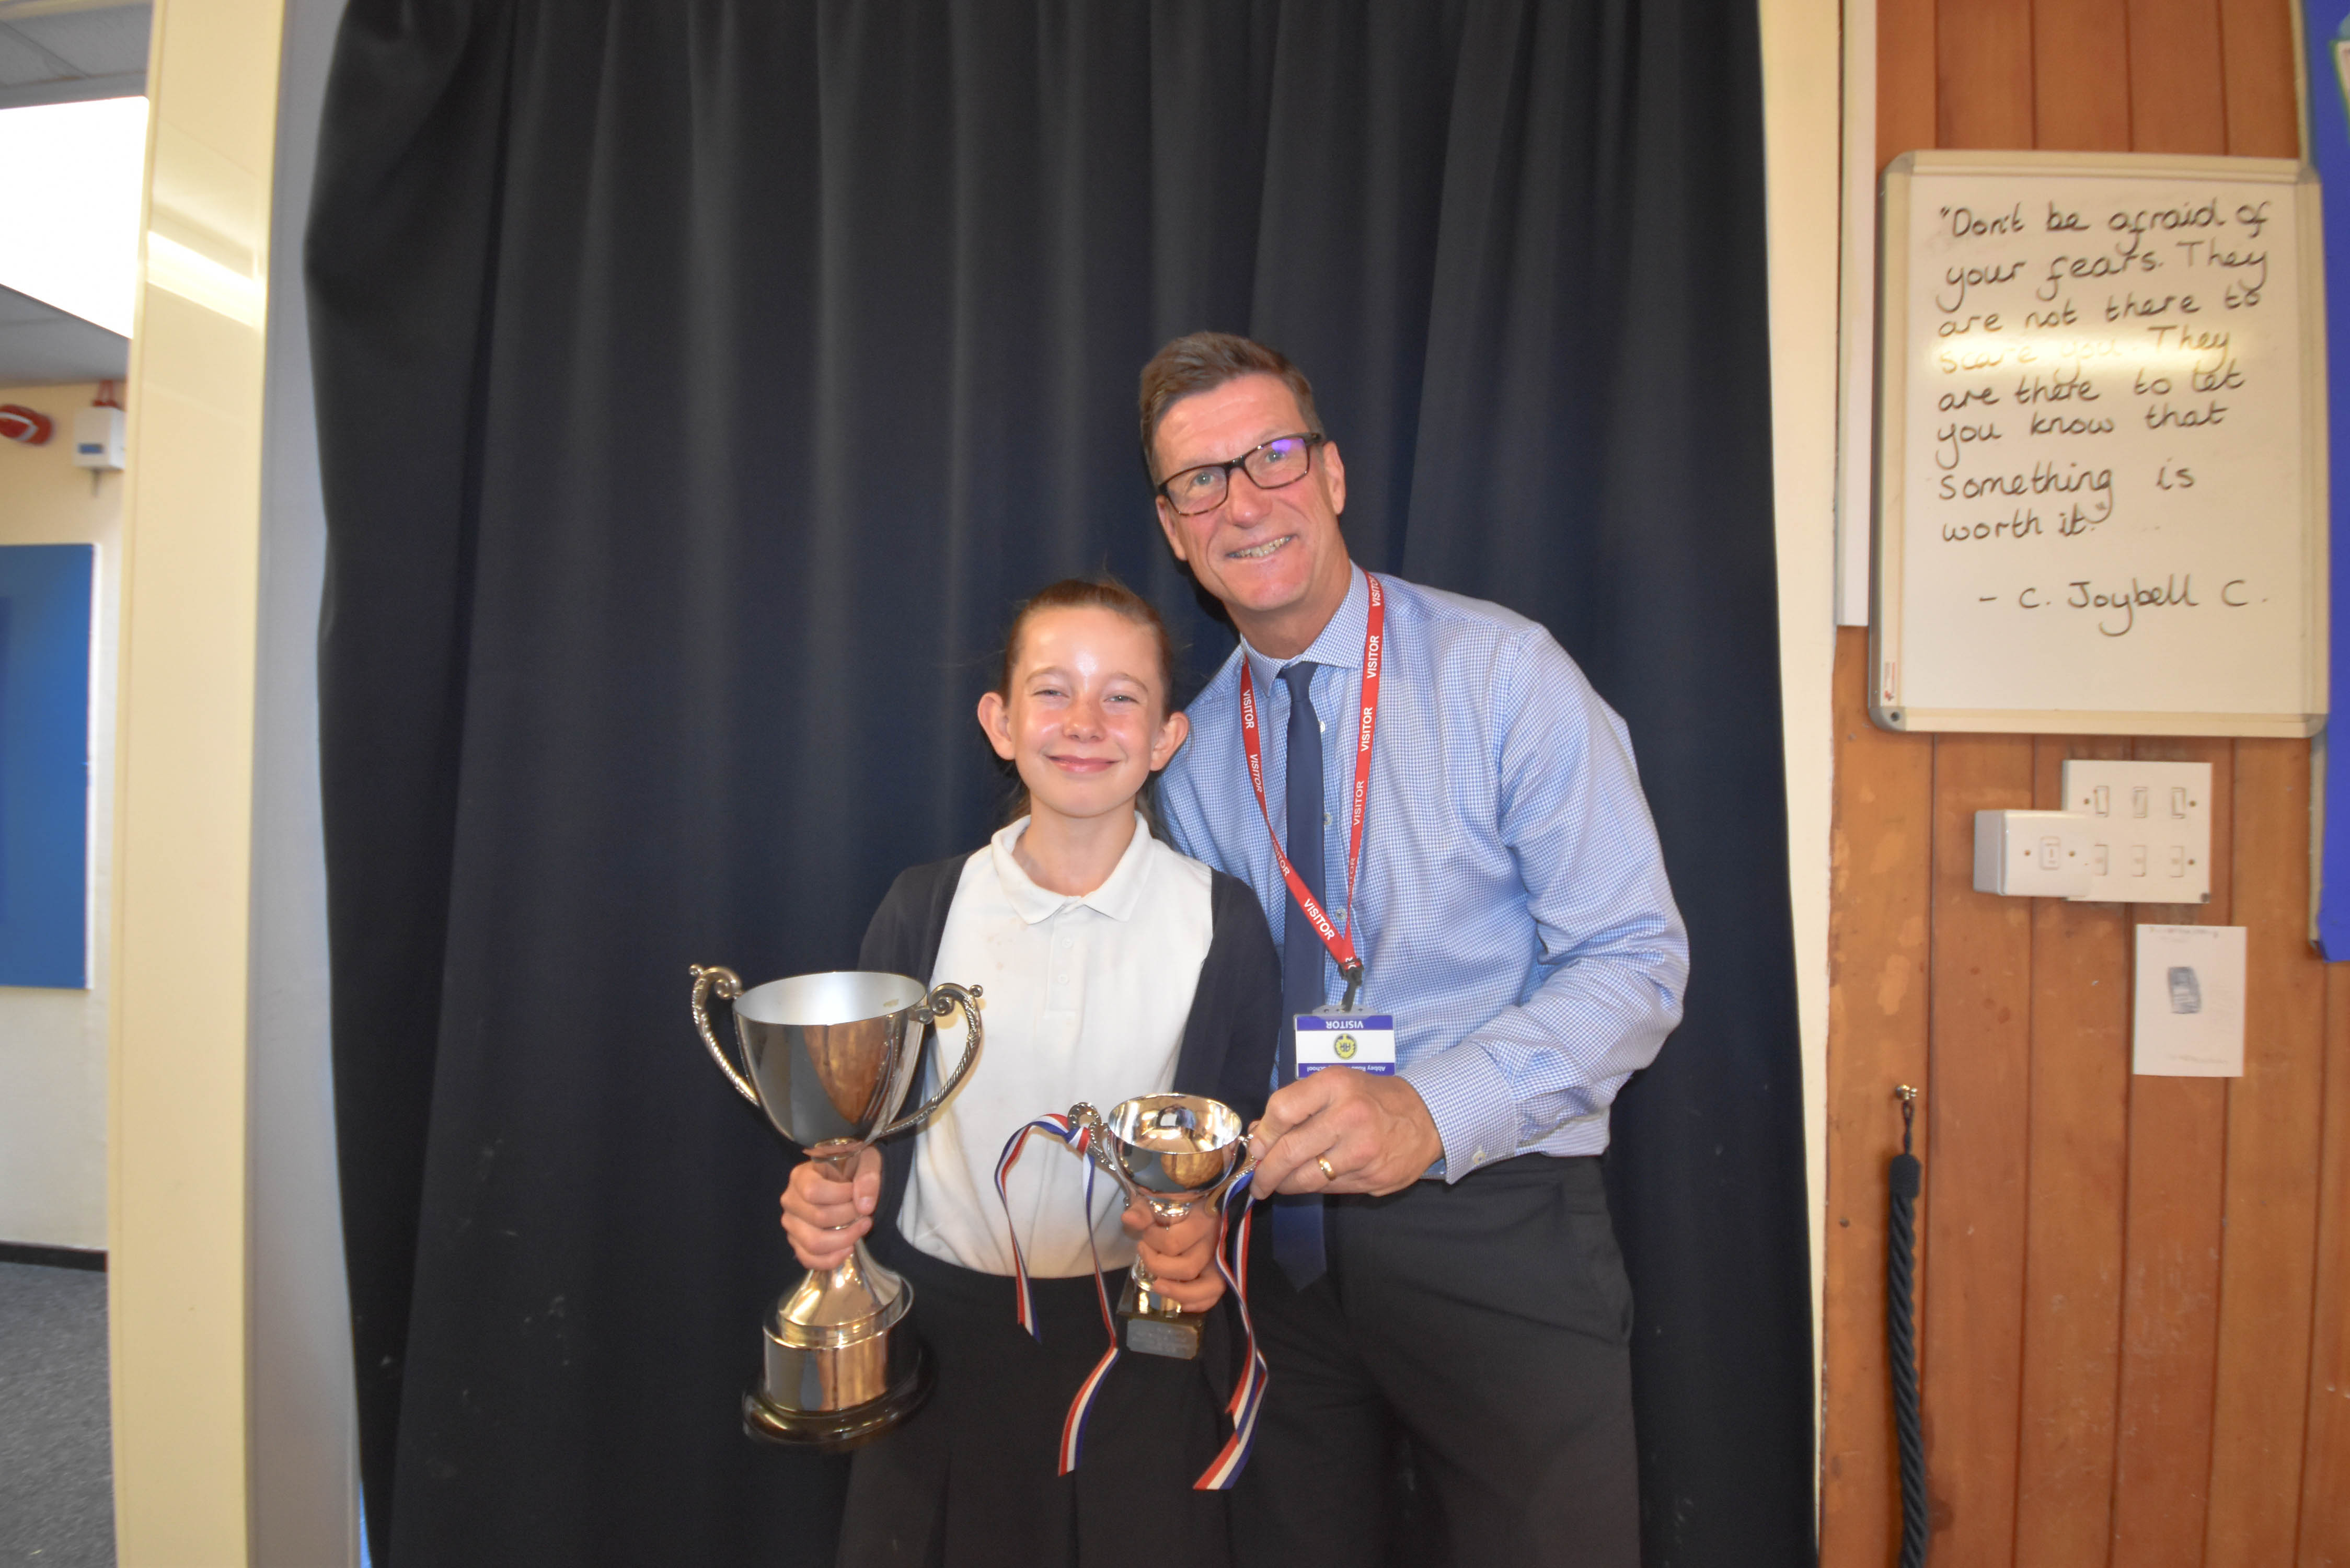 Latest Royston & Lund Sporting Achievement Award at Abbey Road School, West Bridgford